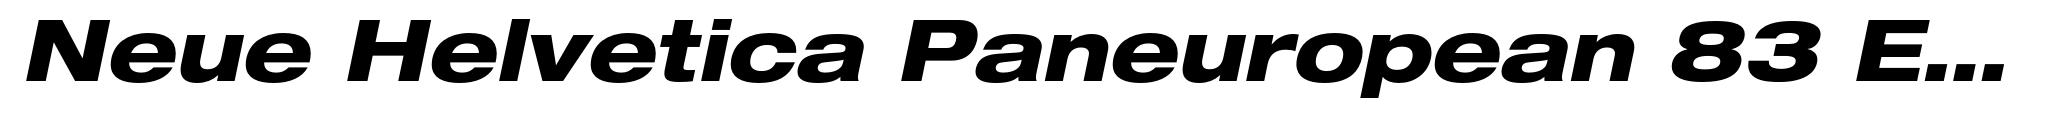 Neue Helvetica Paneuropean 83 Extended Heavy Oblique image